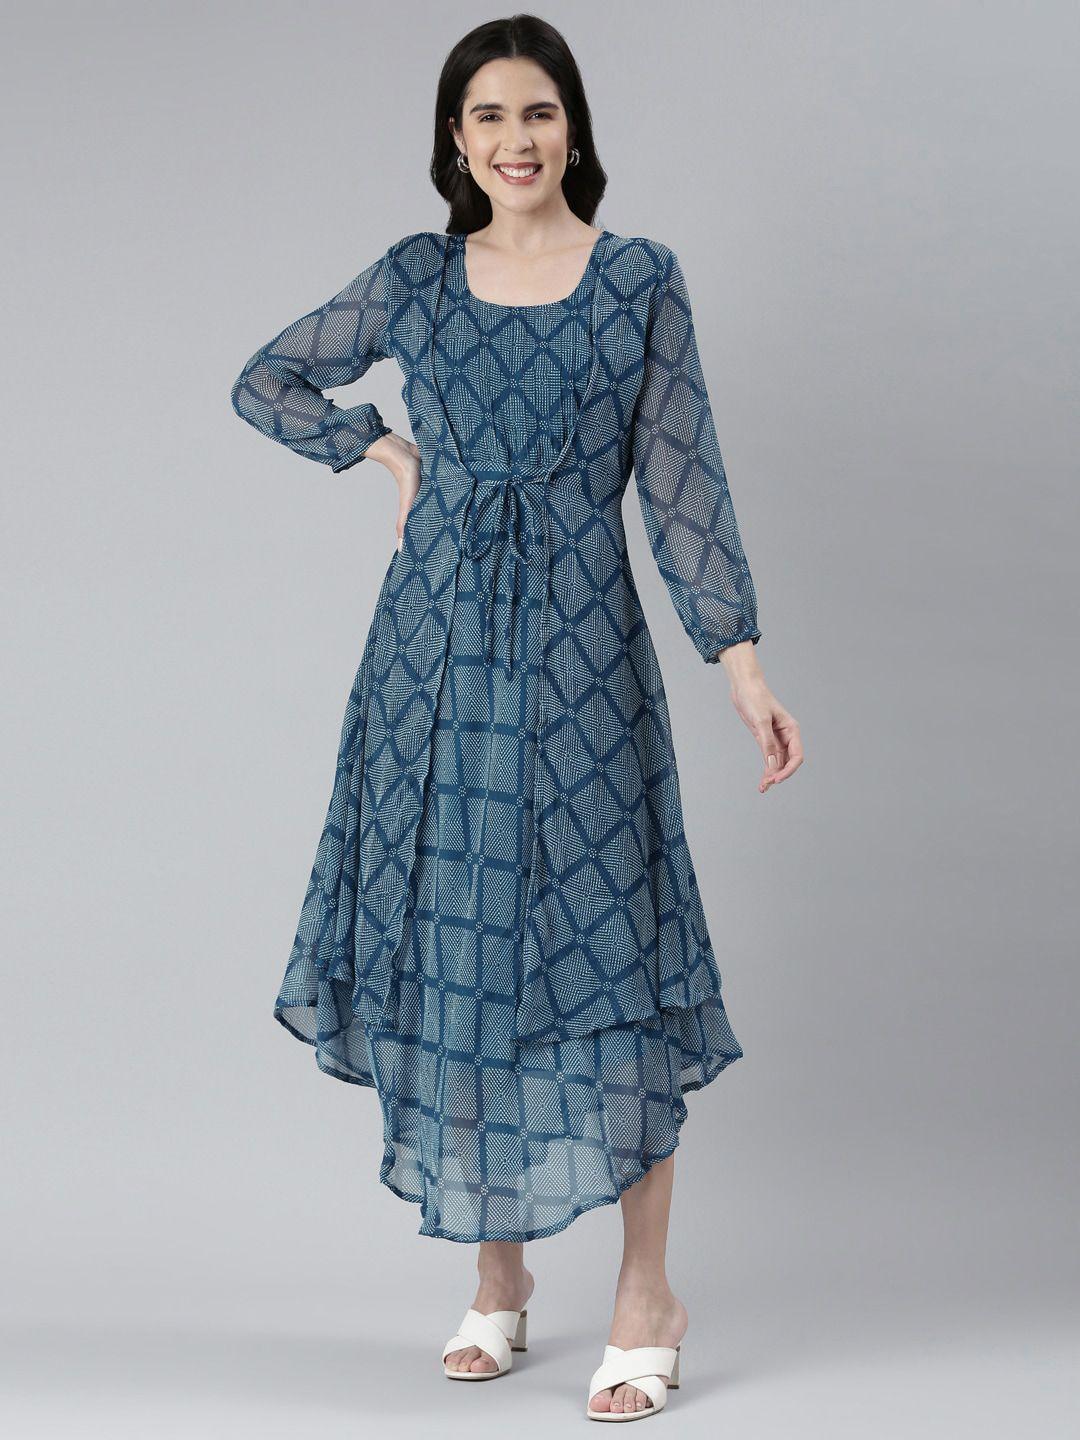 souchii abstract printed layered high-low semi sheer chiffon a-line midi dress